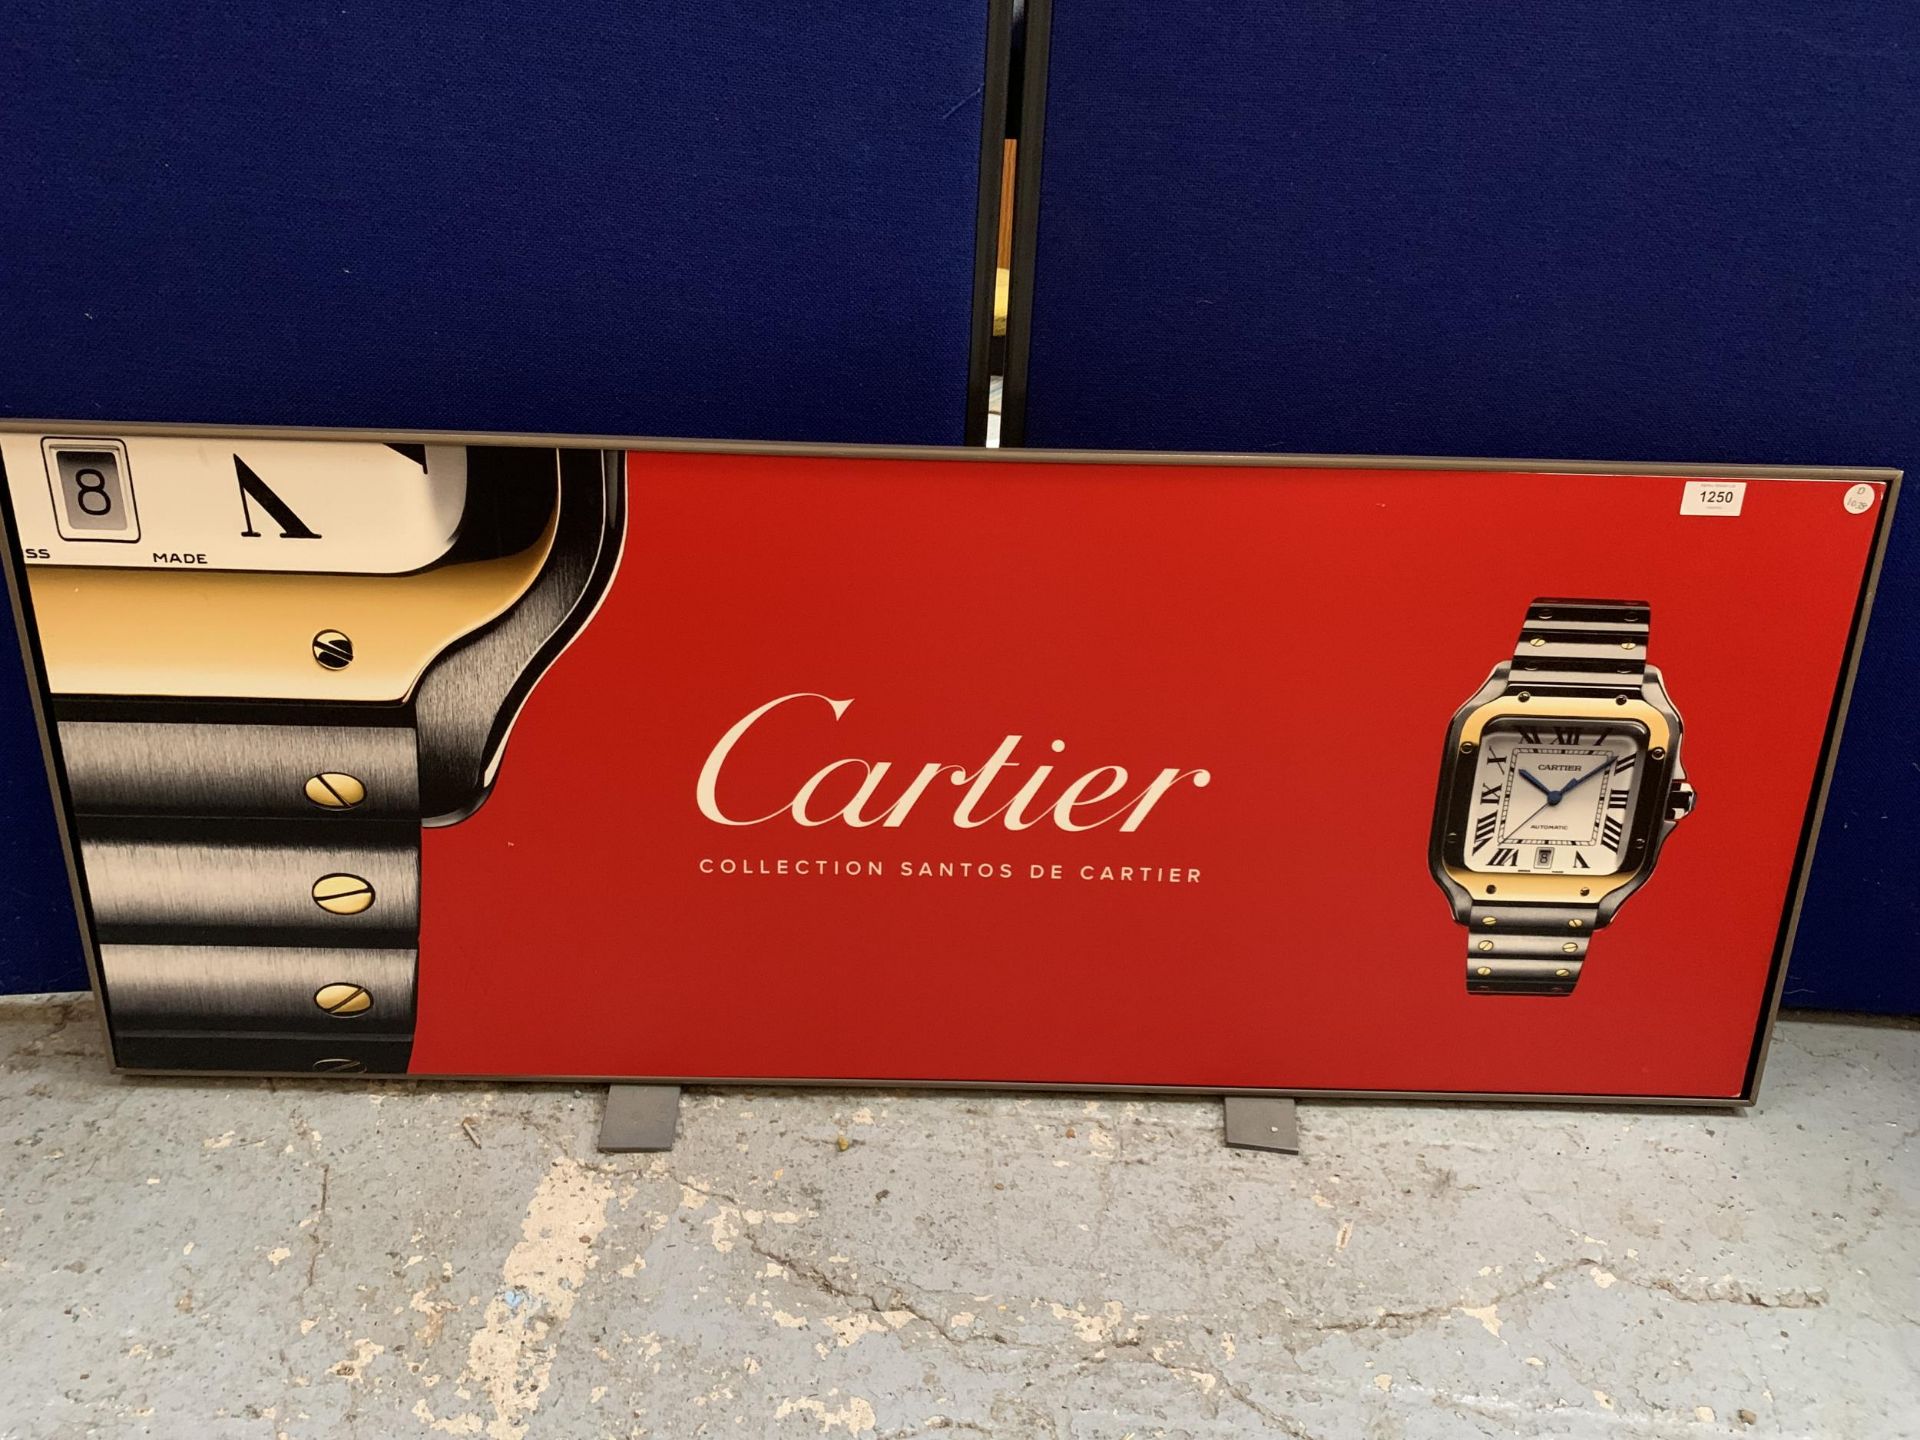 A MODERN PRINT ON BOARD ENTITLED "CARTIER COLLECTION SANTOS DE CARTIER"